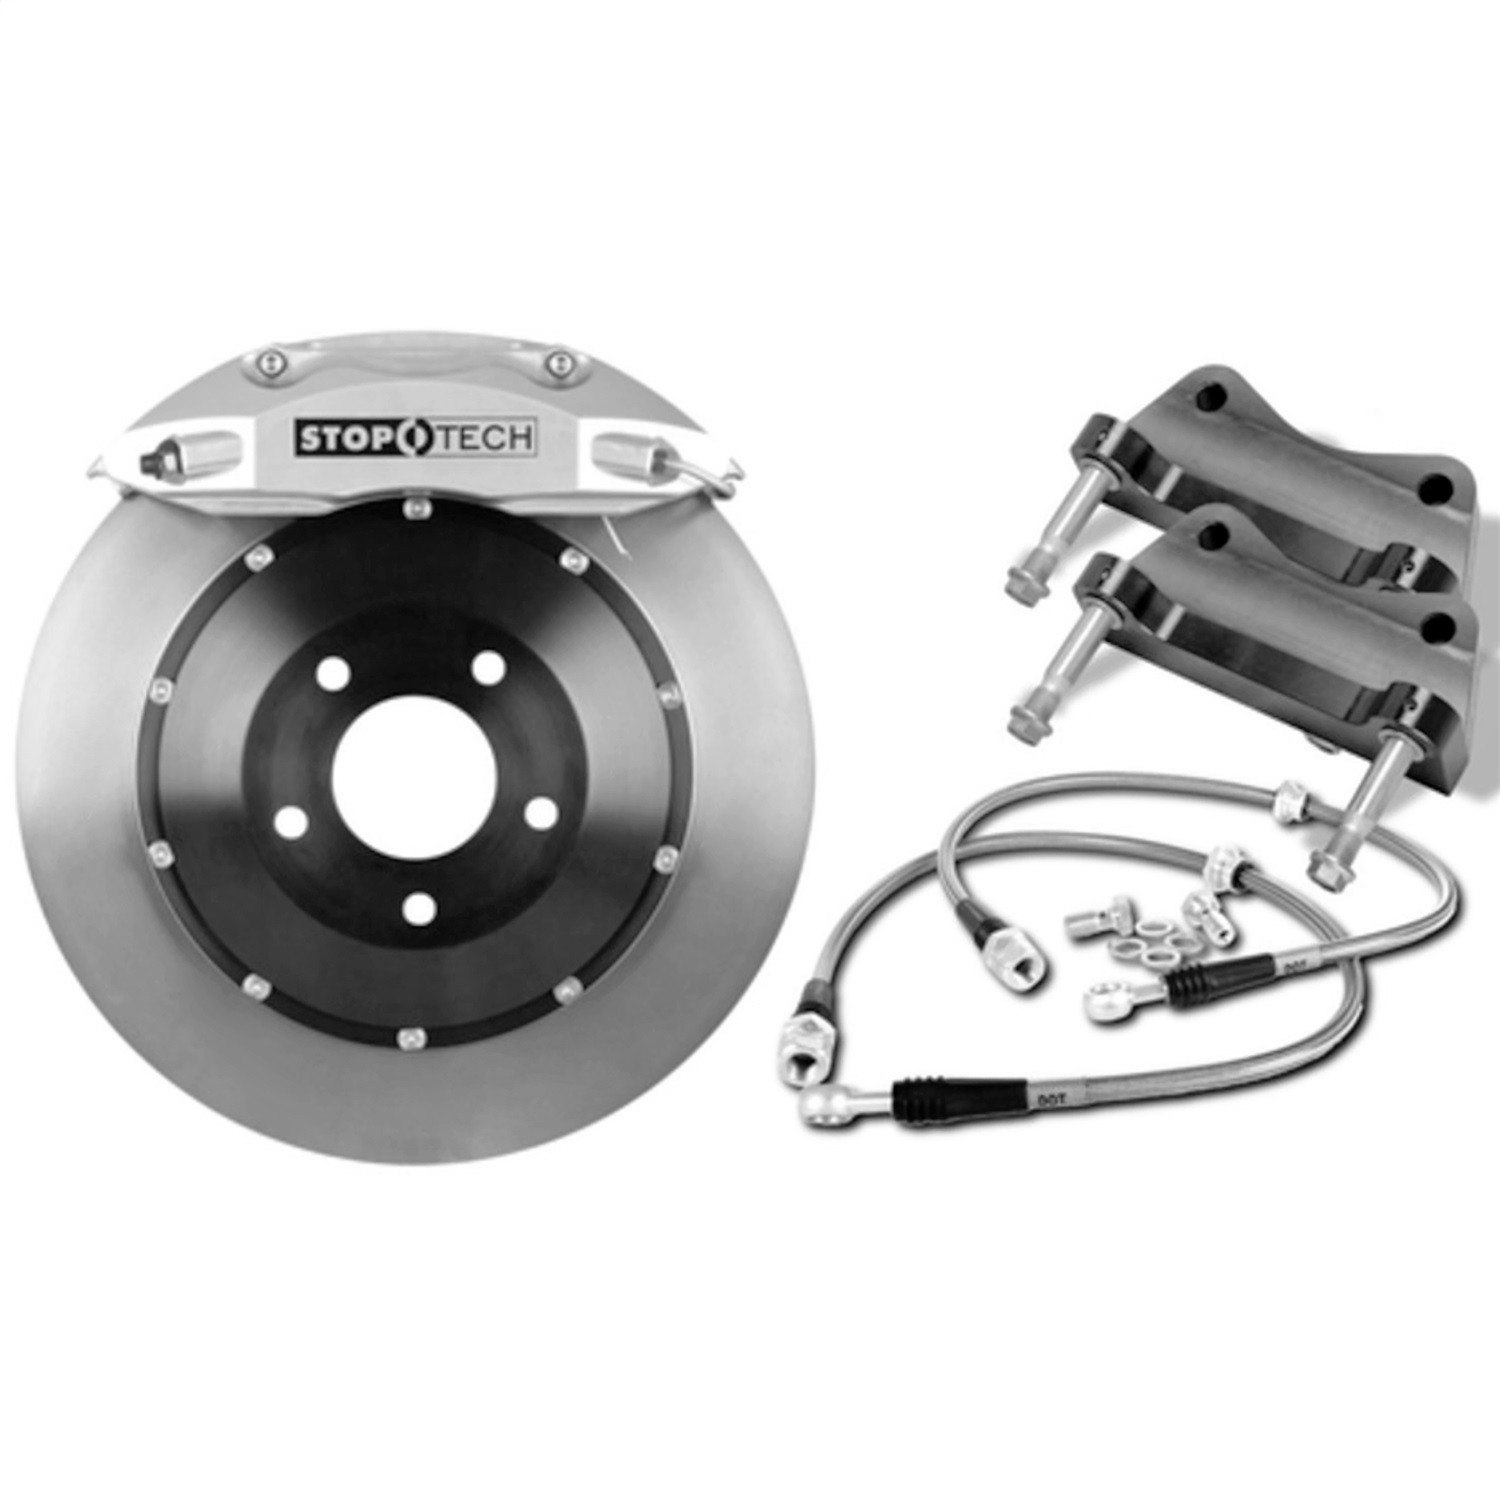 StopTech 83.788.6700.R1 Big Brake Kit w/2 Piece Rotors Fits 00-12 Boxster Cayman